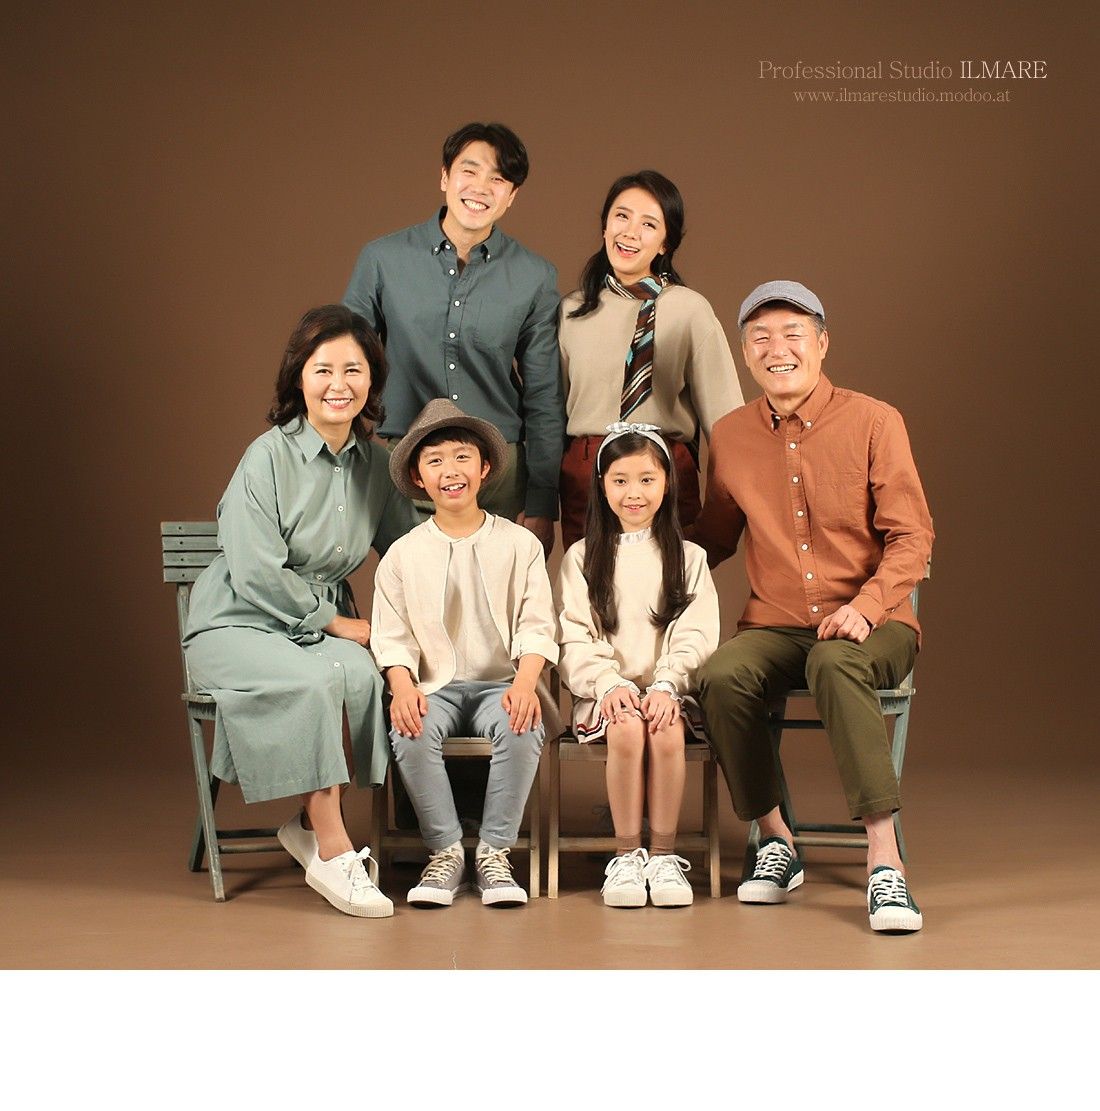 Foto Keluarga Korea